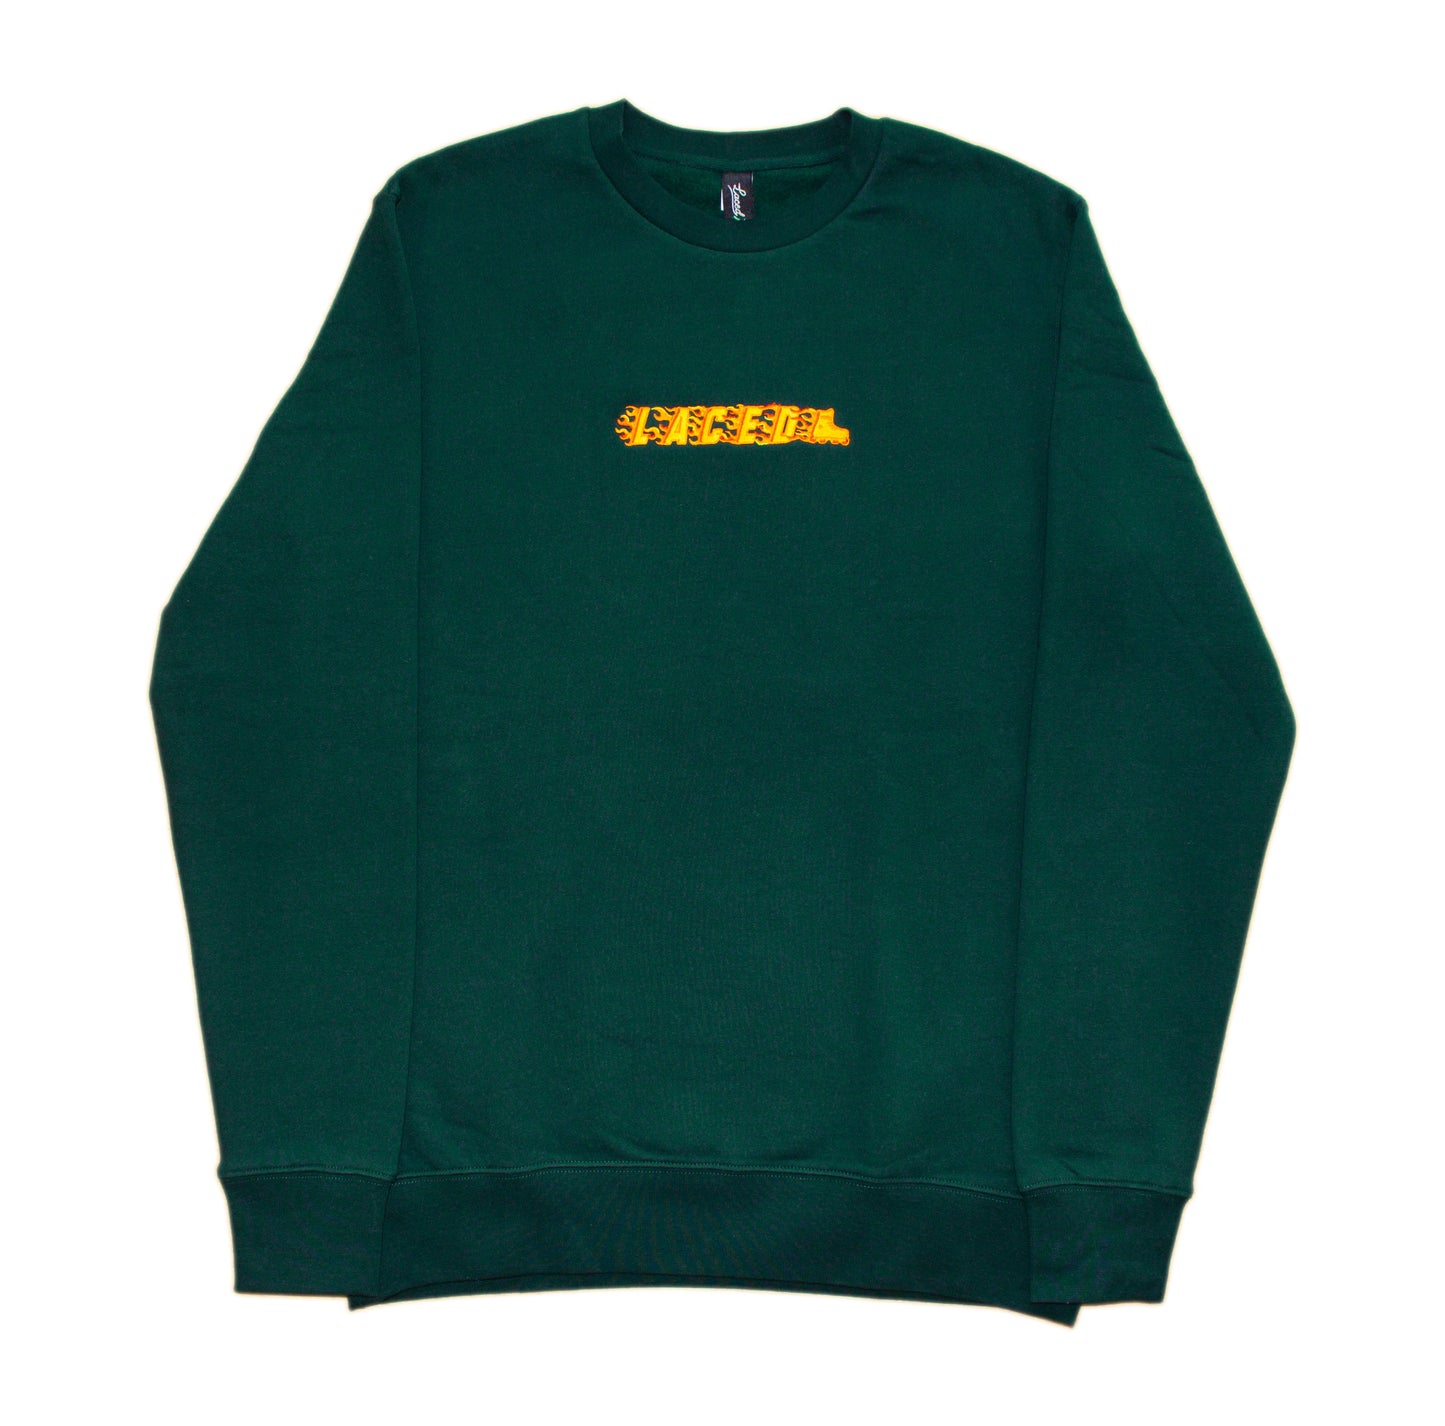 Laced Flame Sweatshirt - Pine Green